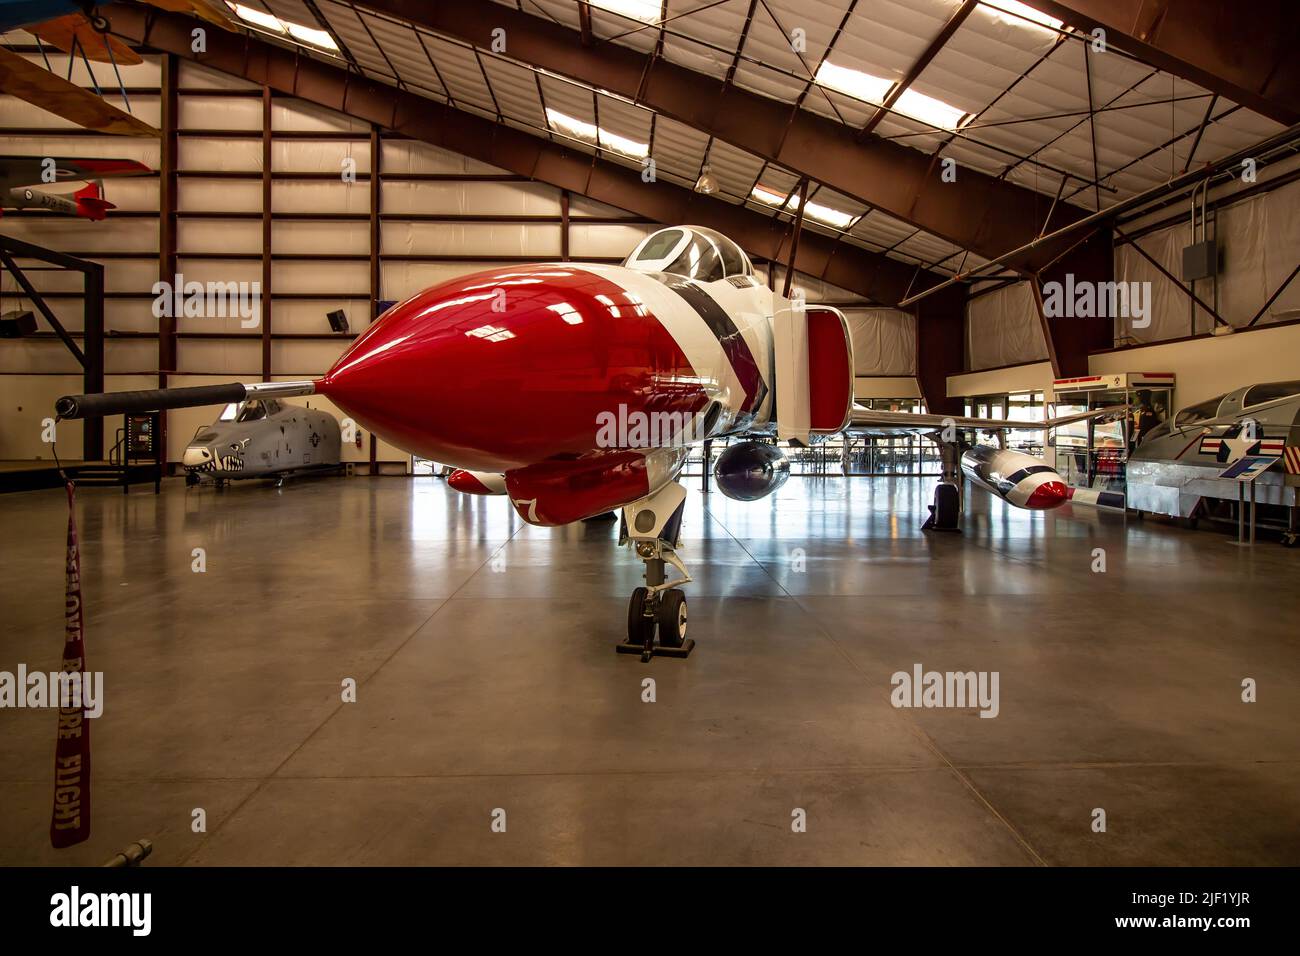 F4E Phantom Fighter Jet On Display In Museum Hangar Stock Photo